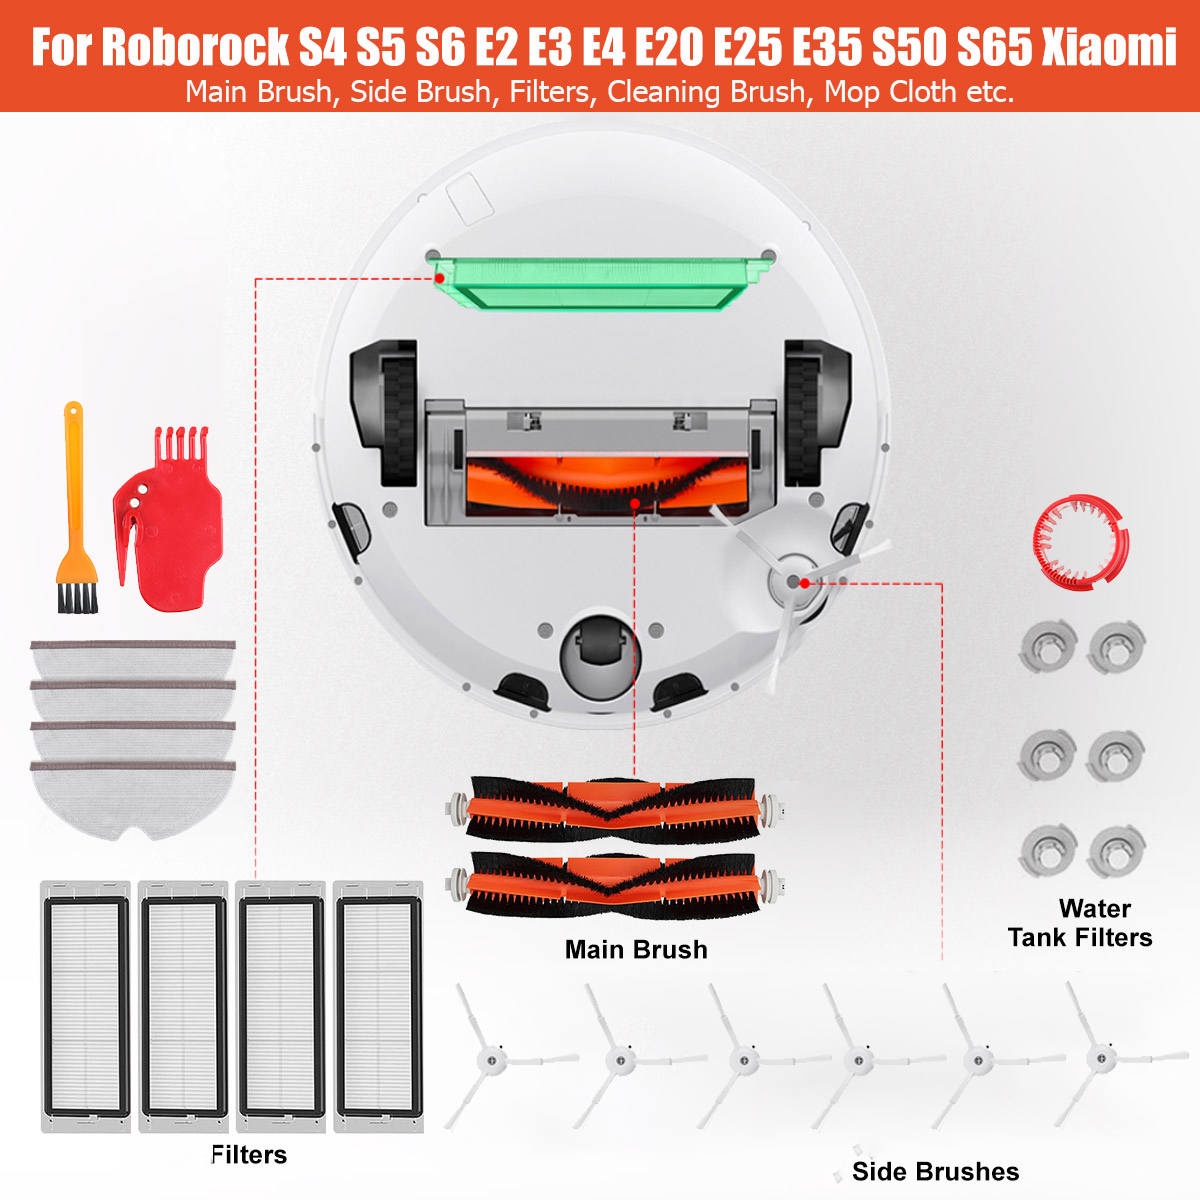 18/30pcs Replacements for Roborock S4 S5 S6 E4 E20 E25 E35 S50 S65 Xiaomi Mi Mijia Robotic Vacuum Cleaner Parts Accessories [Not-original]